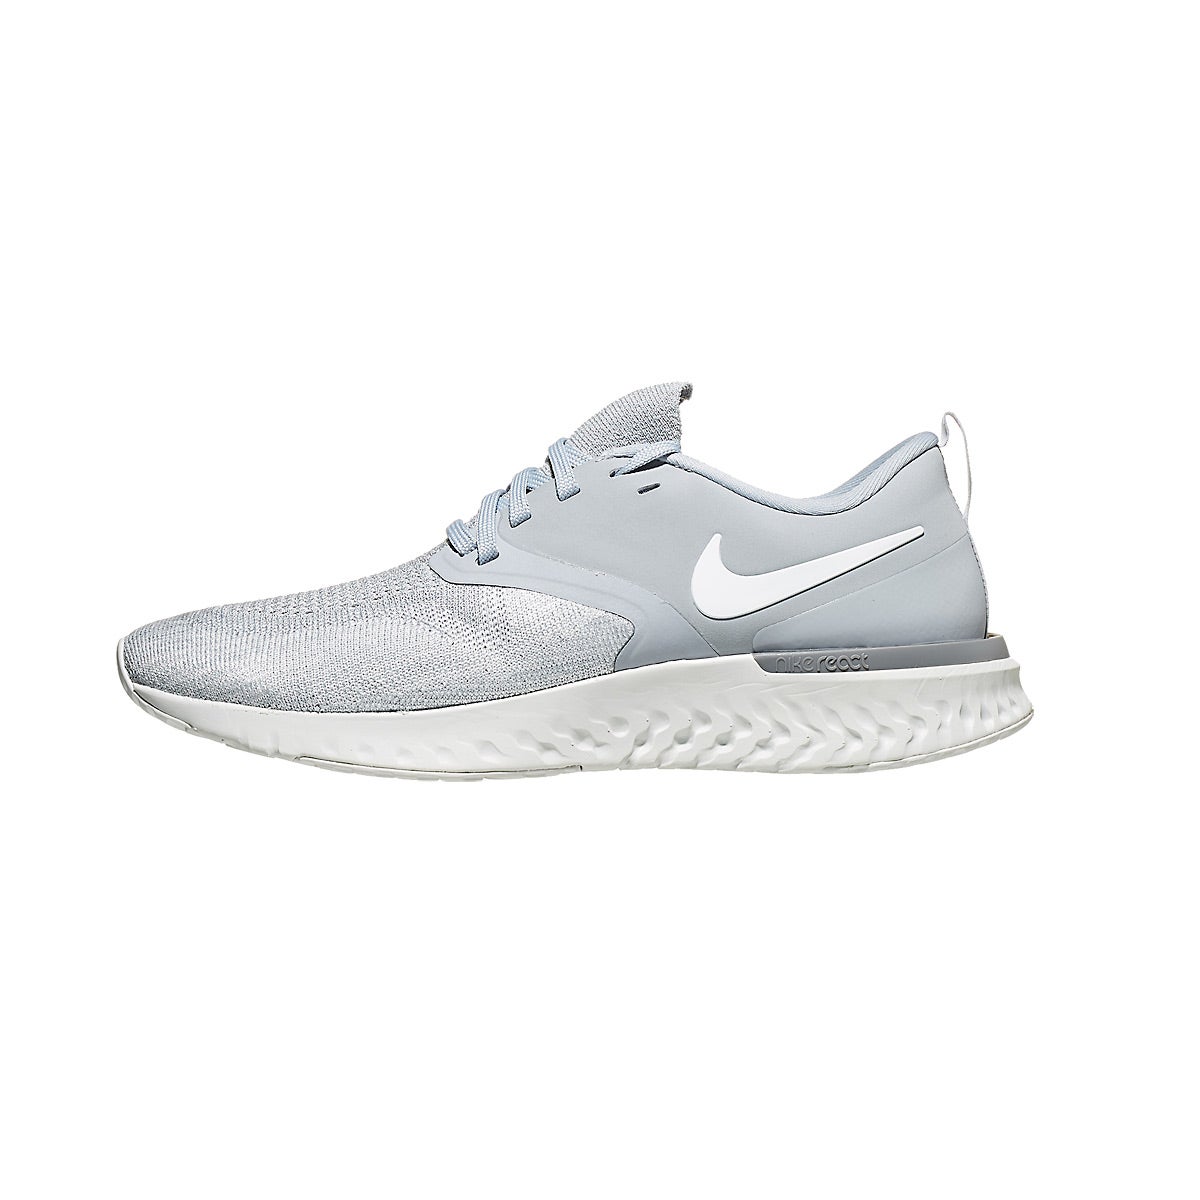 Nike Odyssey React 2 Flyknit Women's Shoes Grey/Whit 360° View ...